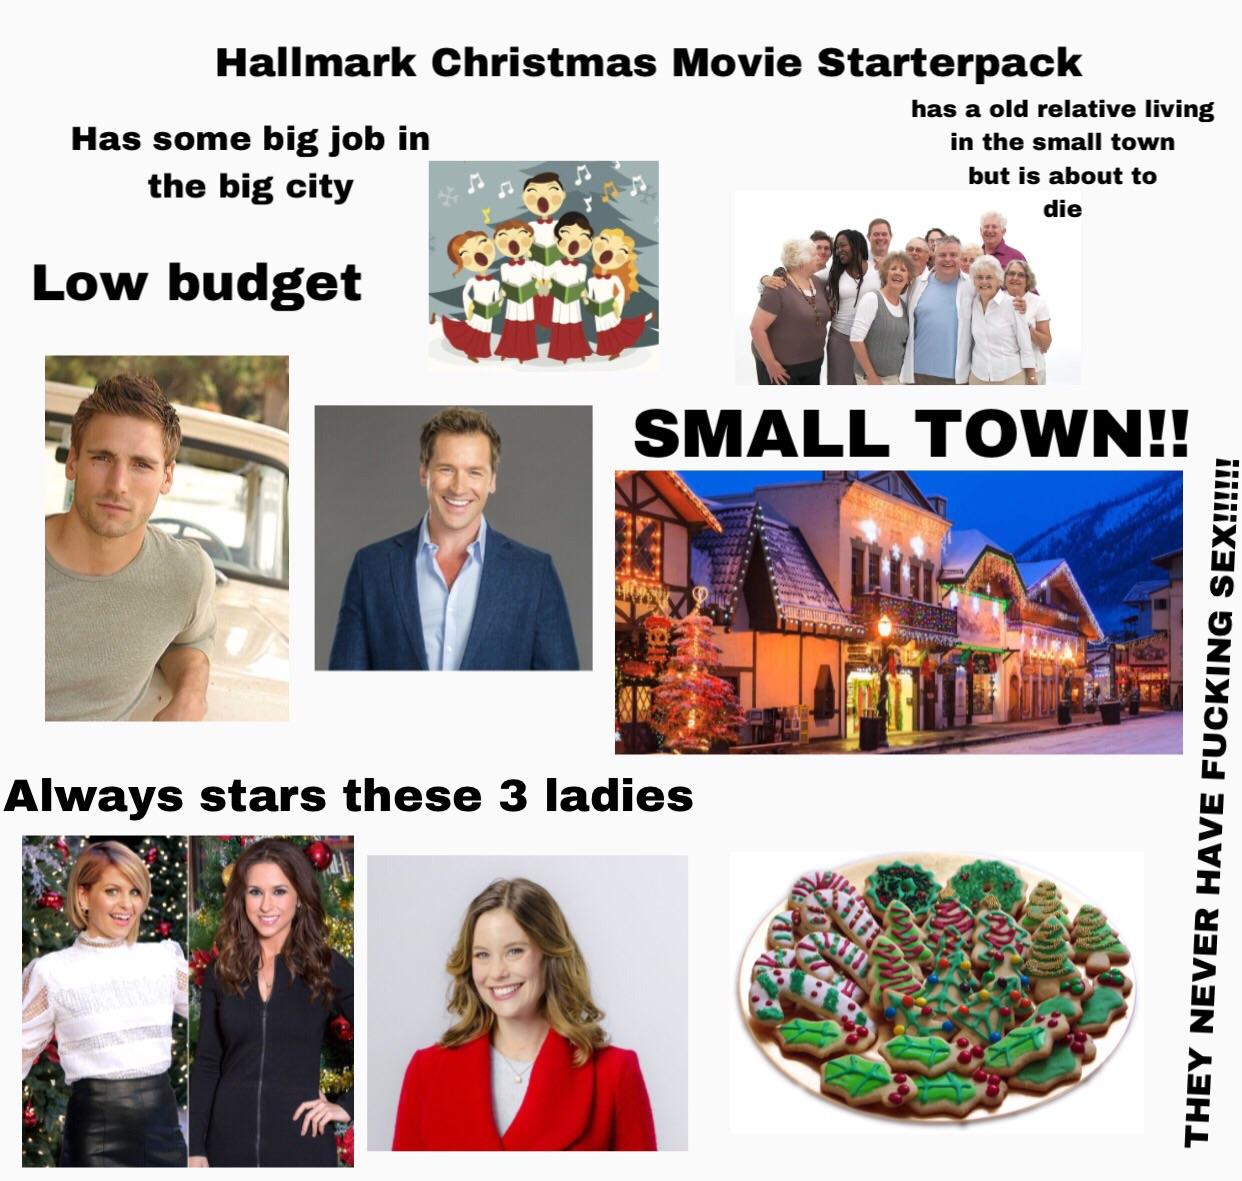 Hallmark Christmas Movies Are Predictable Yet Addictive ...